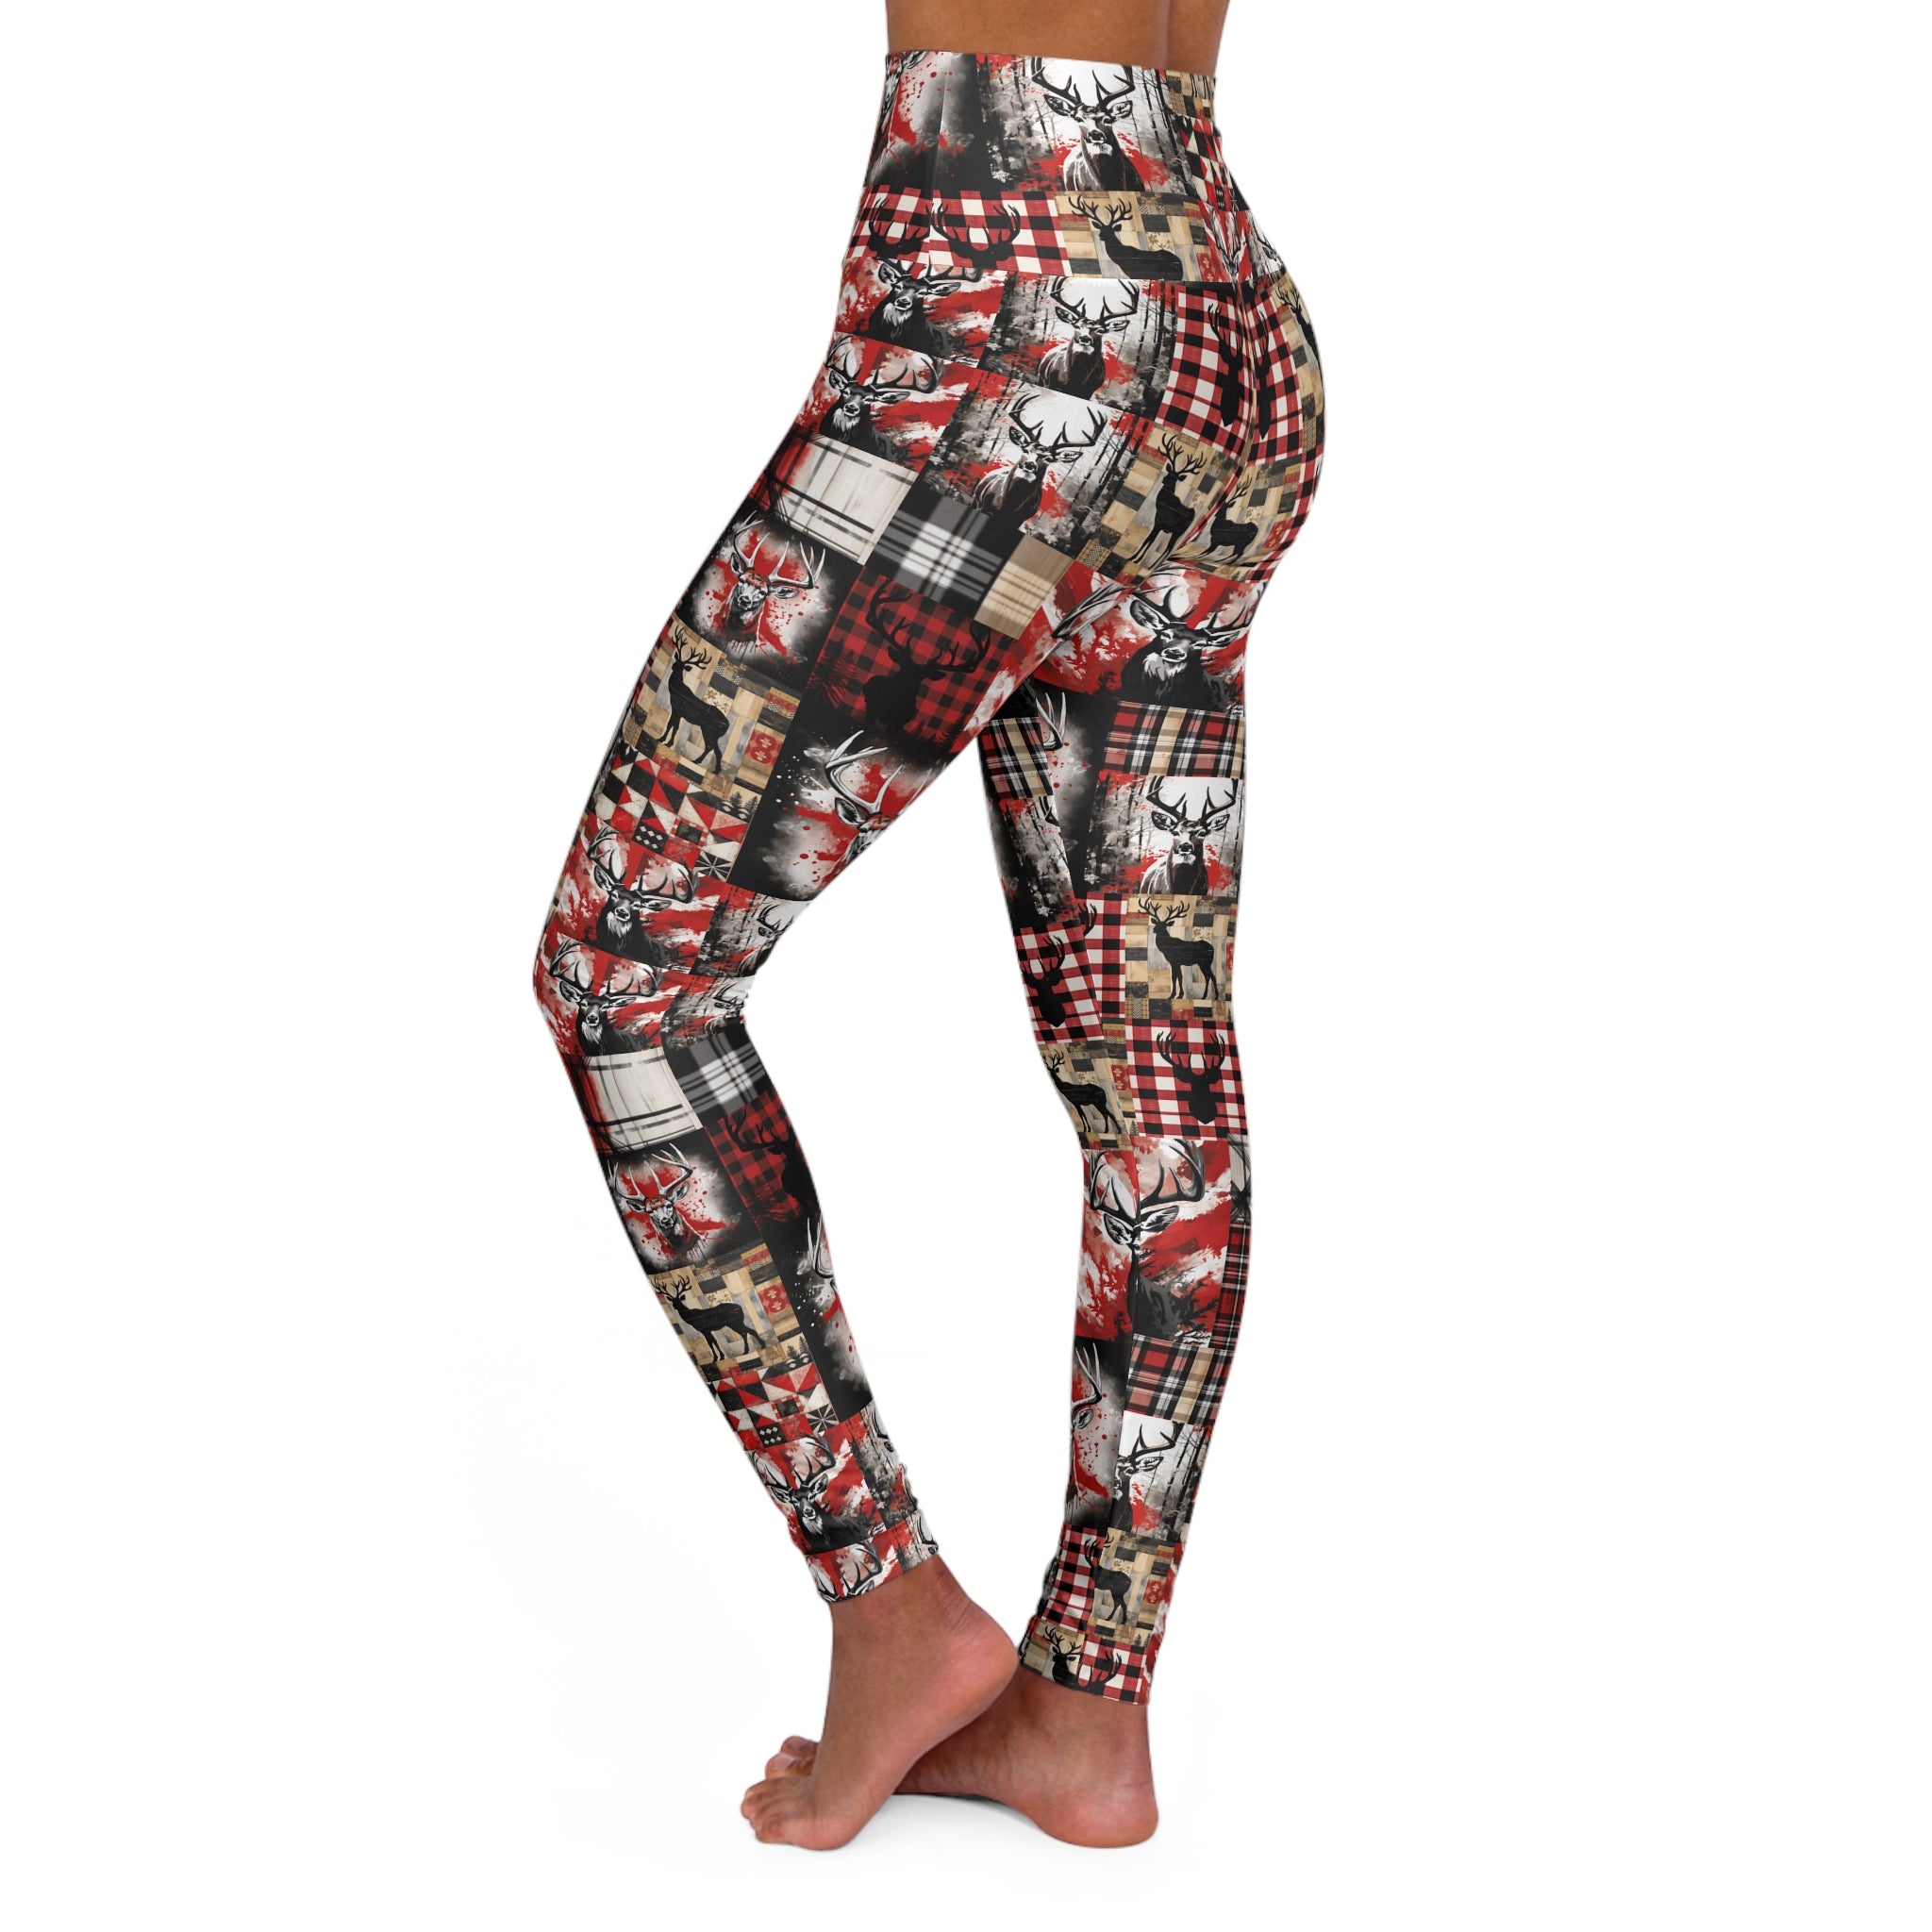 Deer Print Gym Leggings for Women S-2XL - High Waist Design